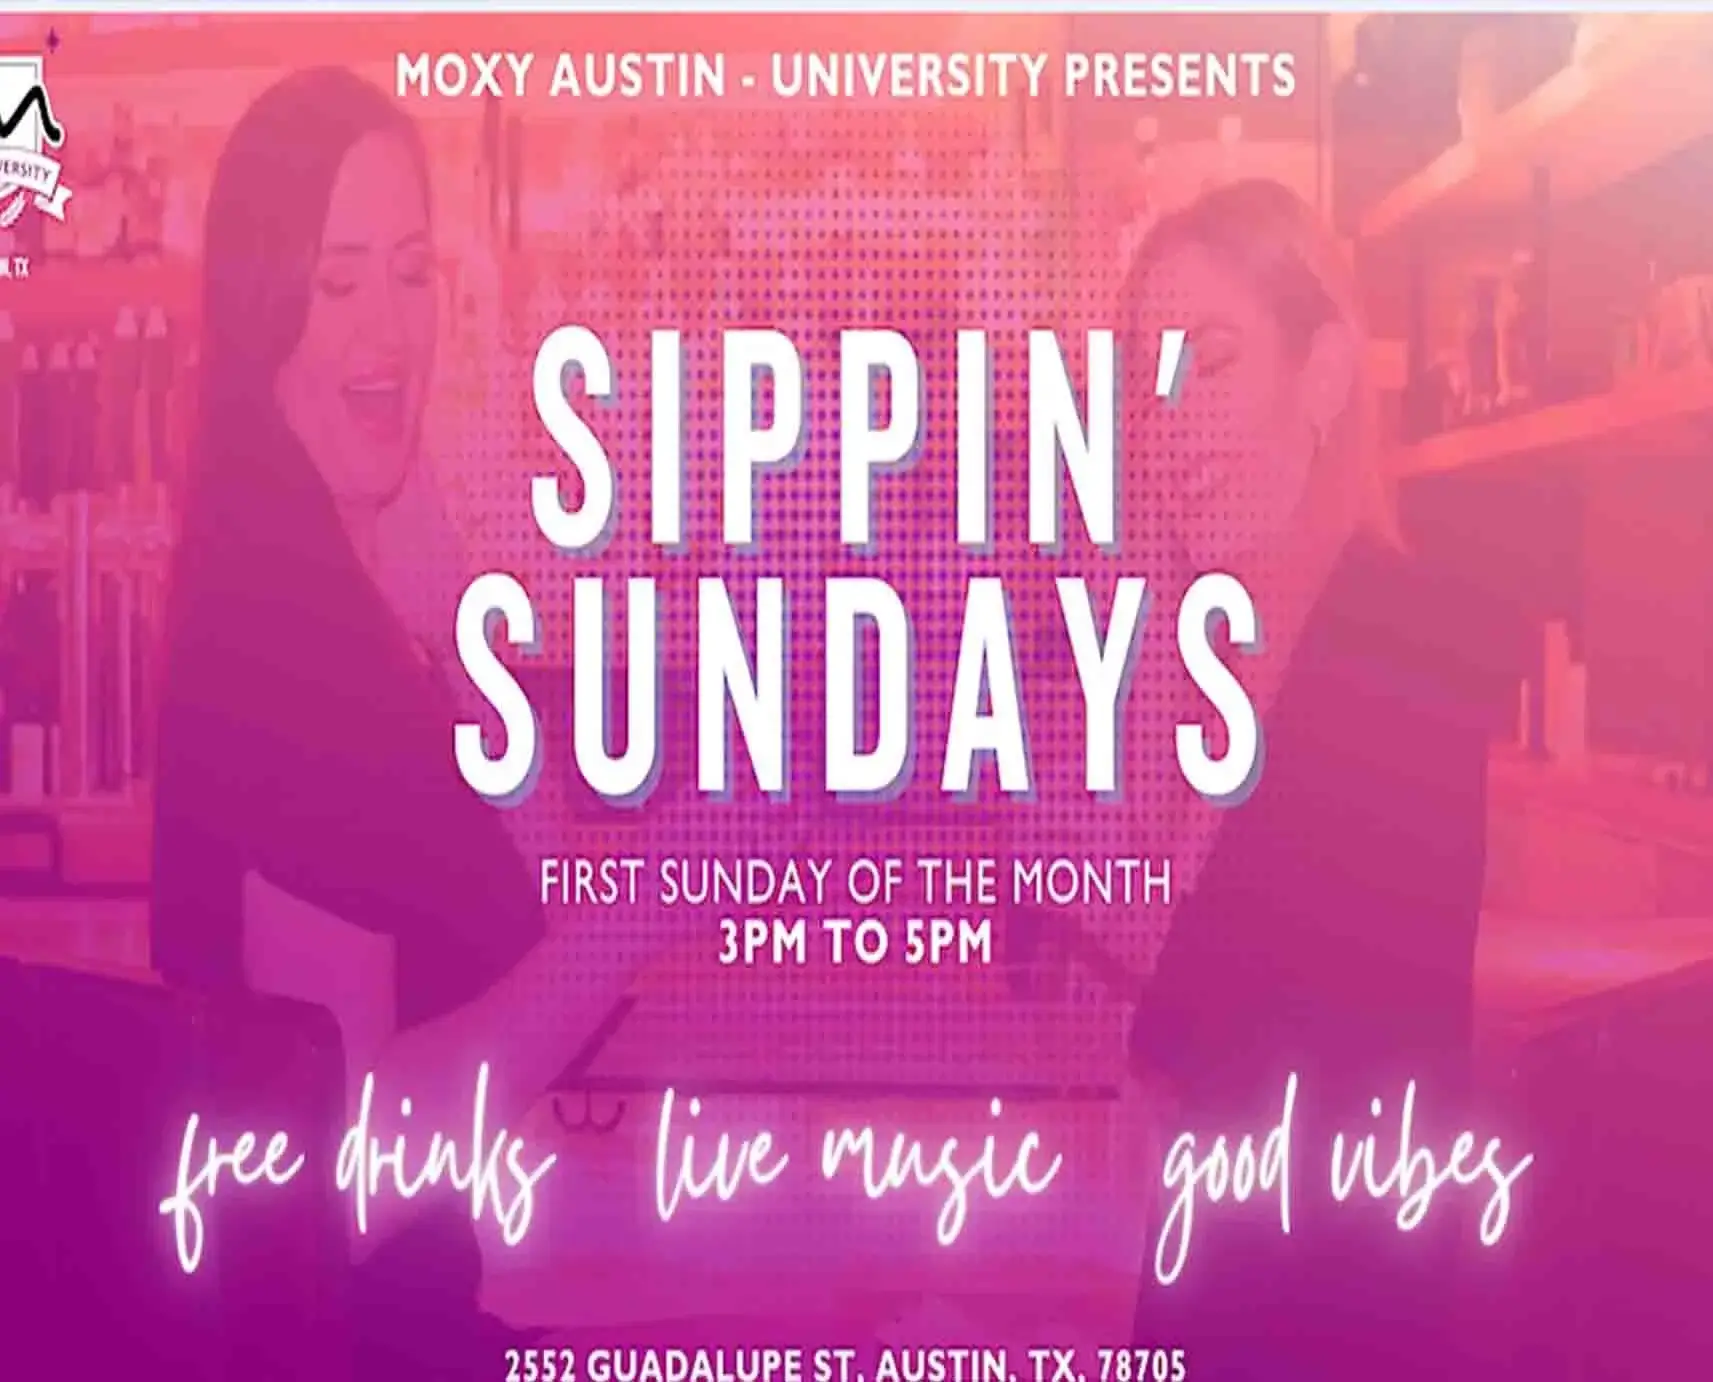 Sippin' Sundays at Moxy